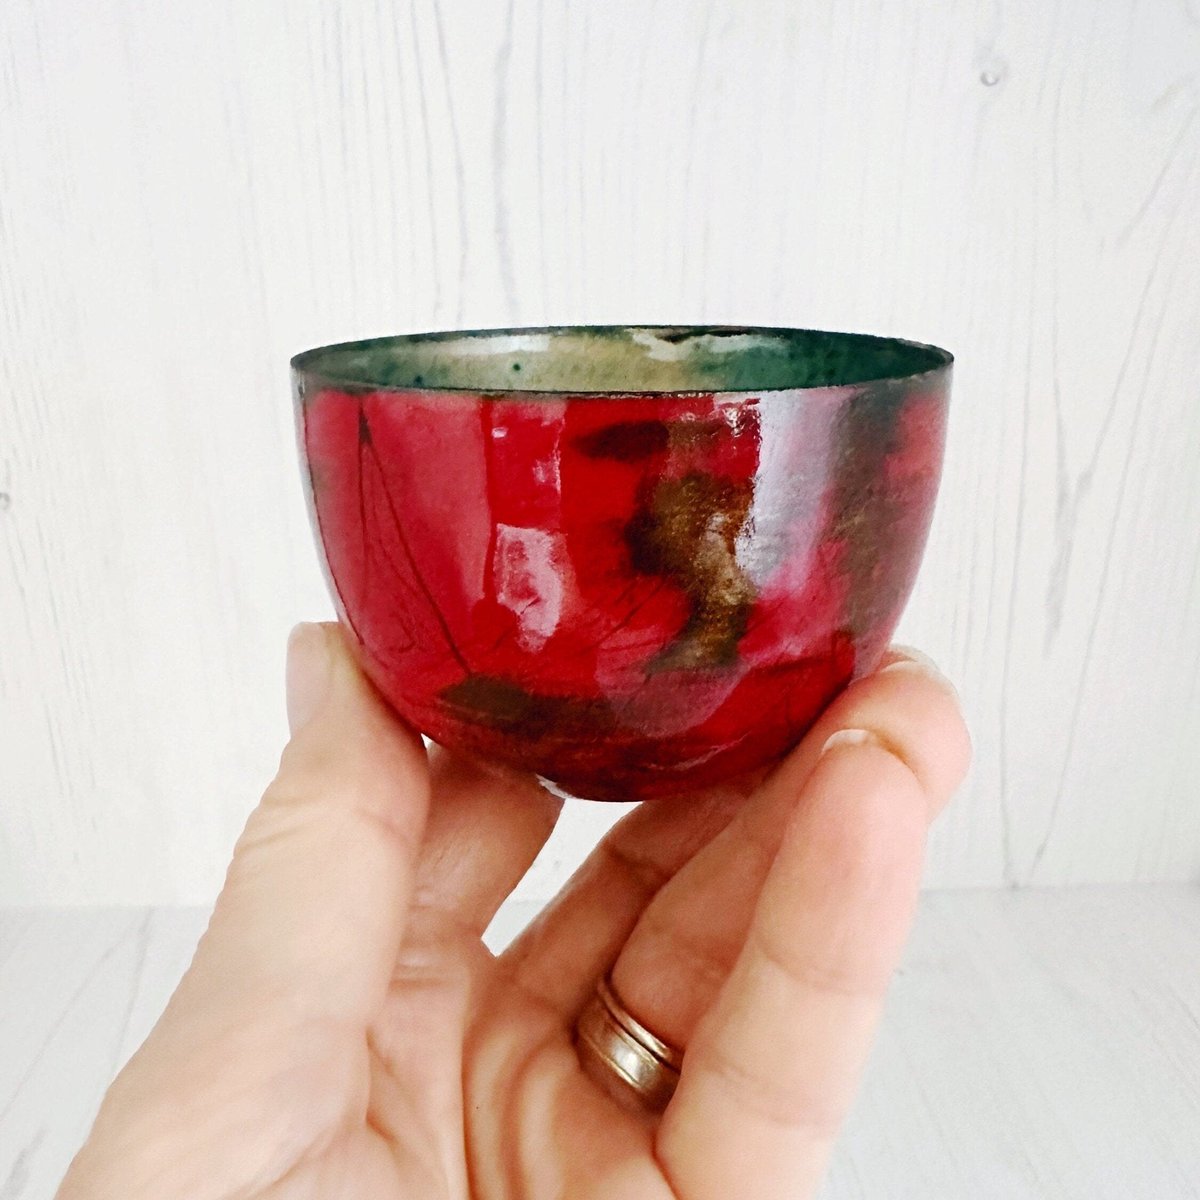 Red Enamel Bowl - Home Decor - Decorative Bowl - New Home Gift Idea tuppu.net/fad9b930 ##UKGiftHour #HandmadeHour #MHHSBD #UKHashtags #inbizhour #giftideas #shopsmall #bizbubble #HouseWarmingGift